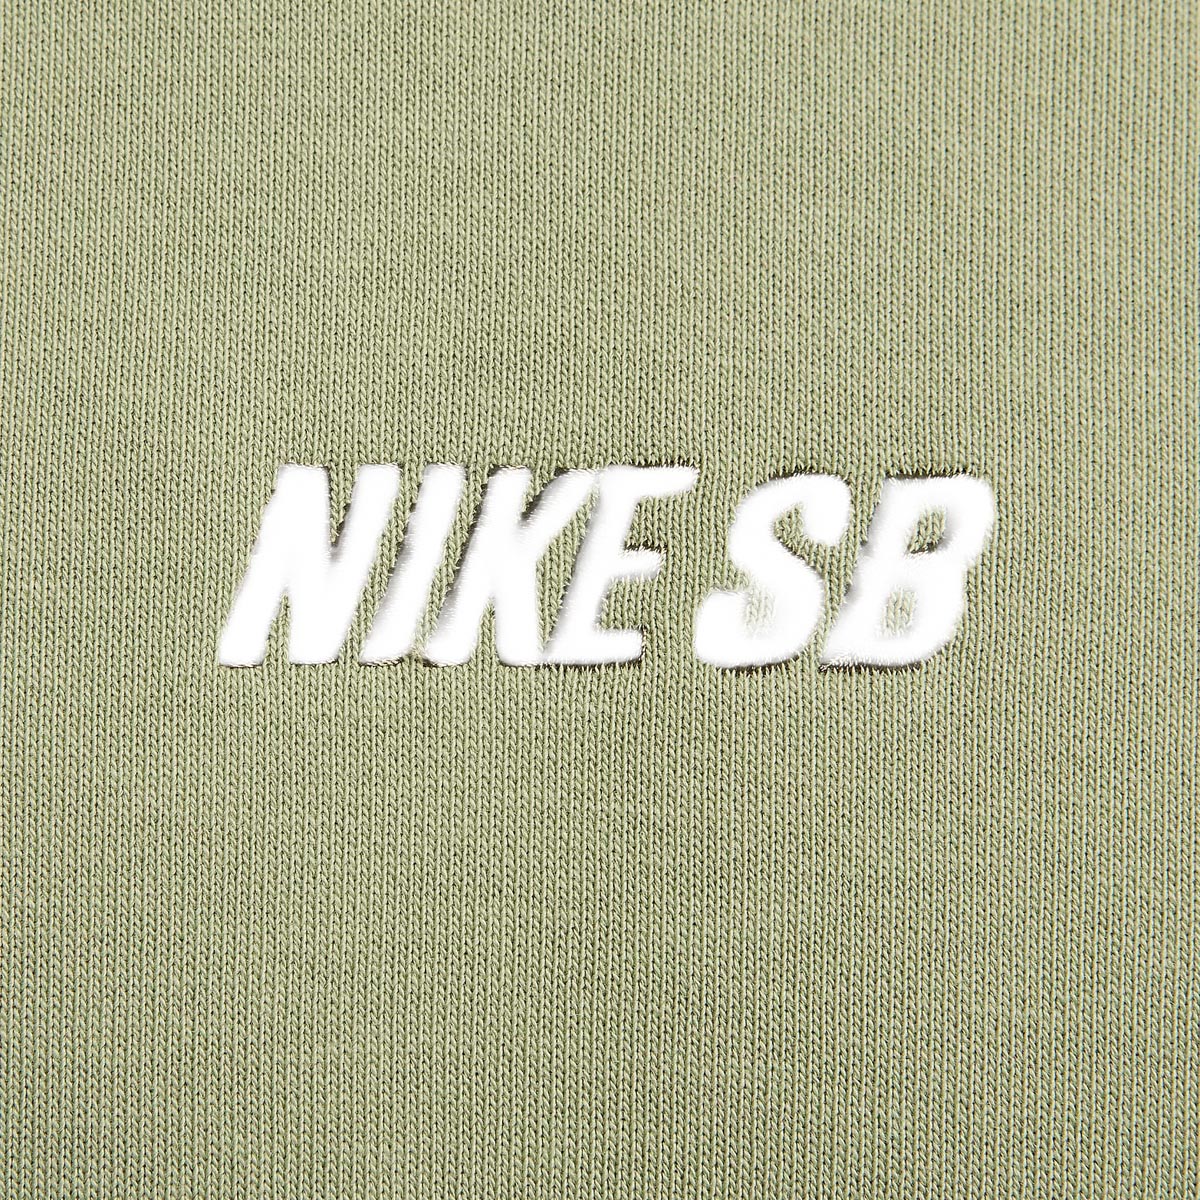 Nike SB Skate Embroidered Hoodie - Oil Green/Medium Olive image 4